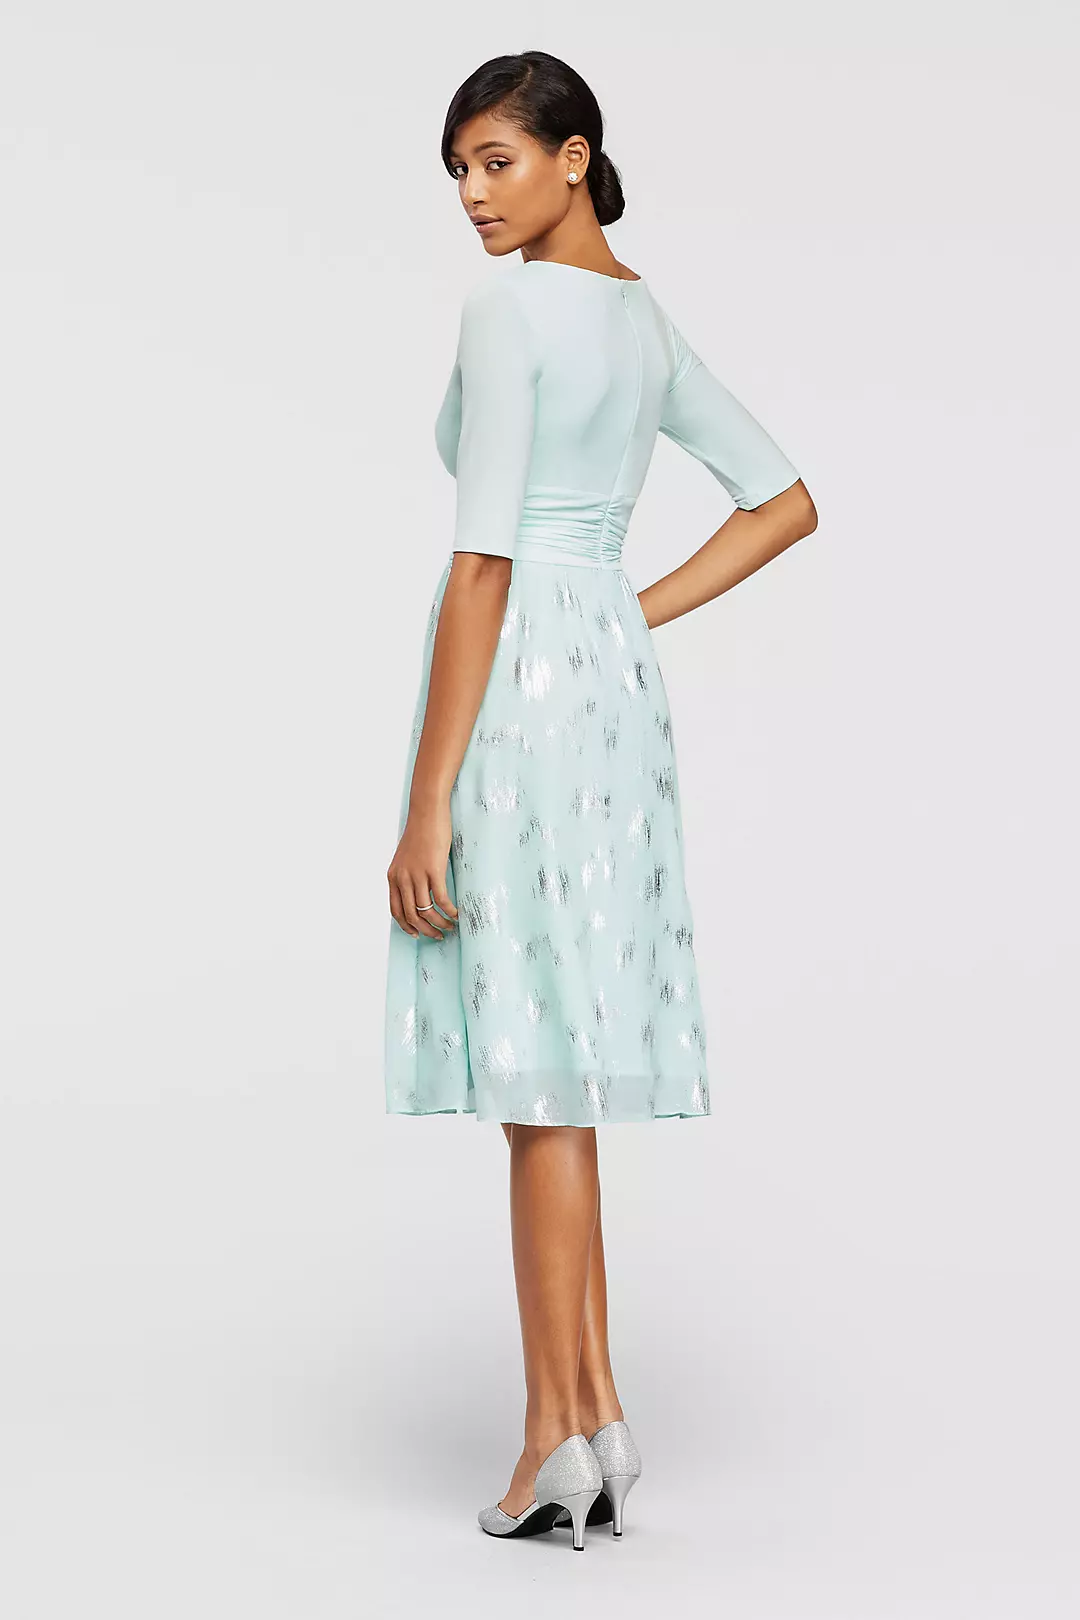 3/4 Sleeved Short Dress with Patterned Skirt Image 2